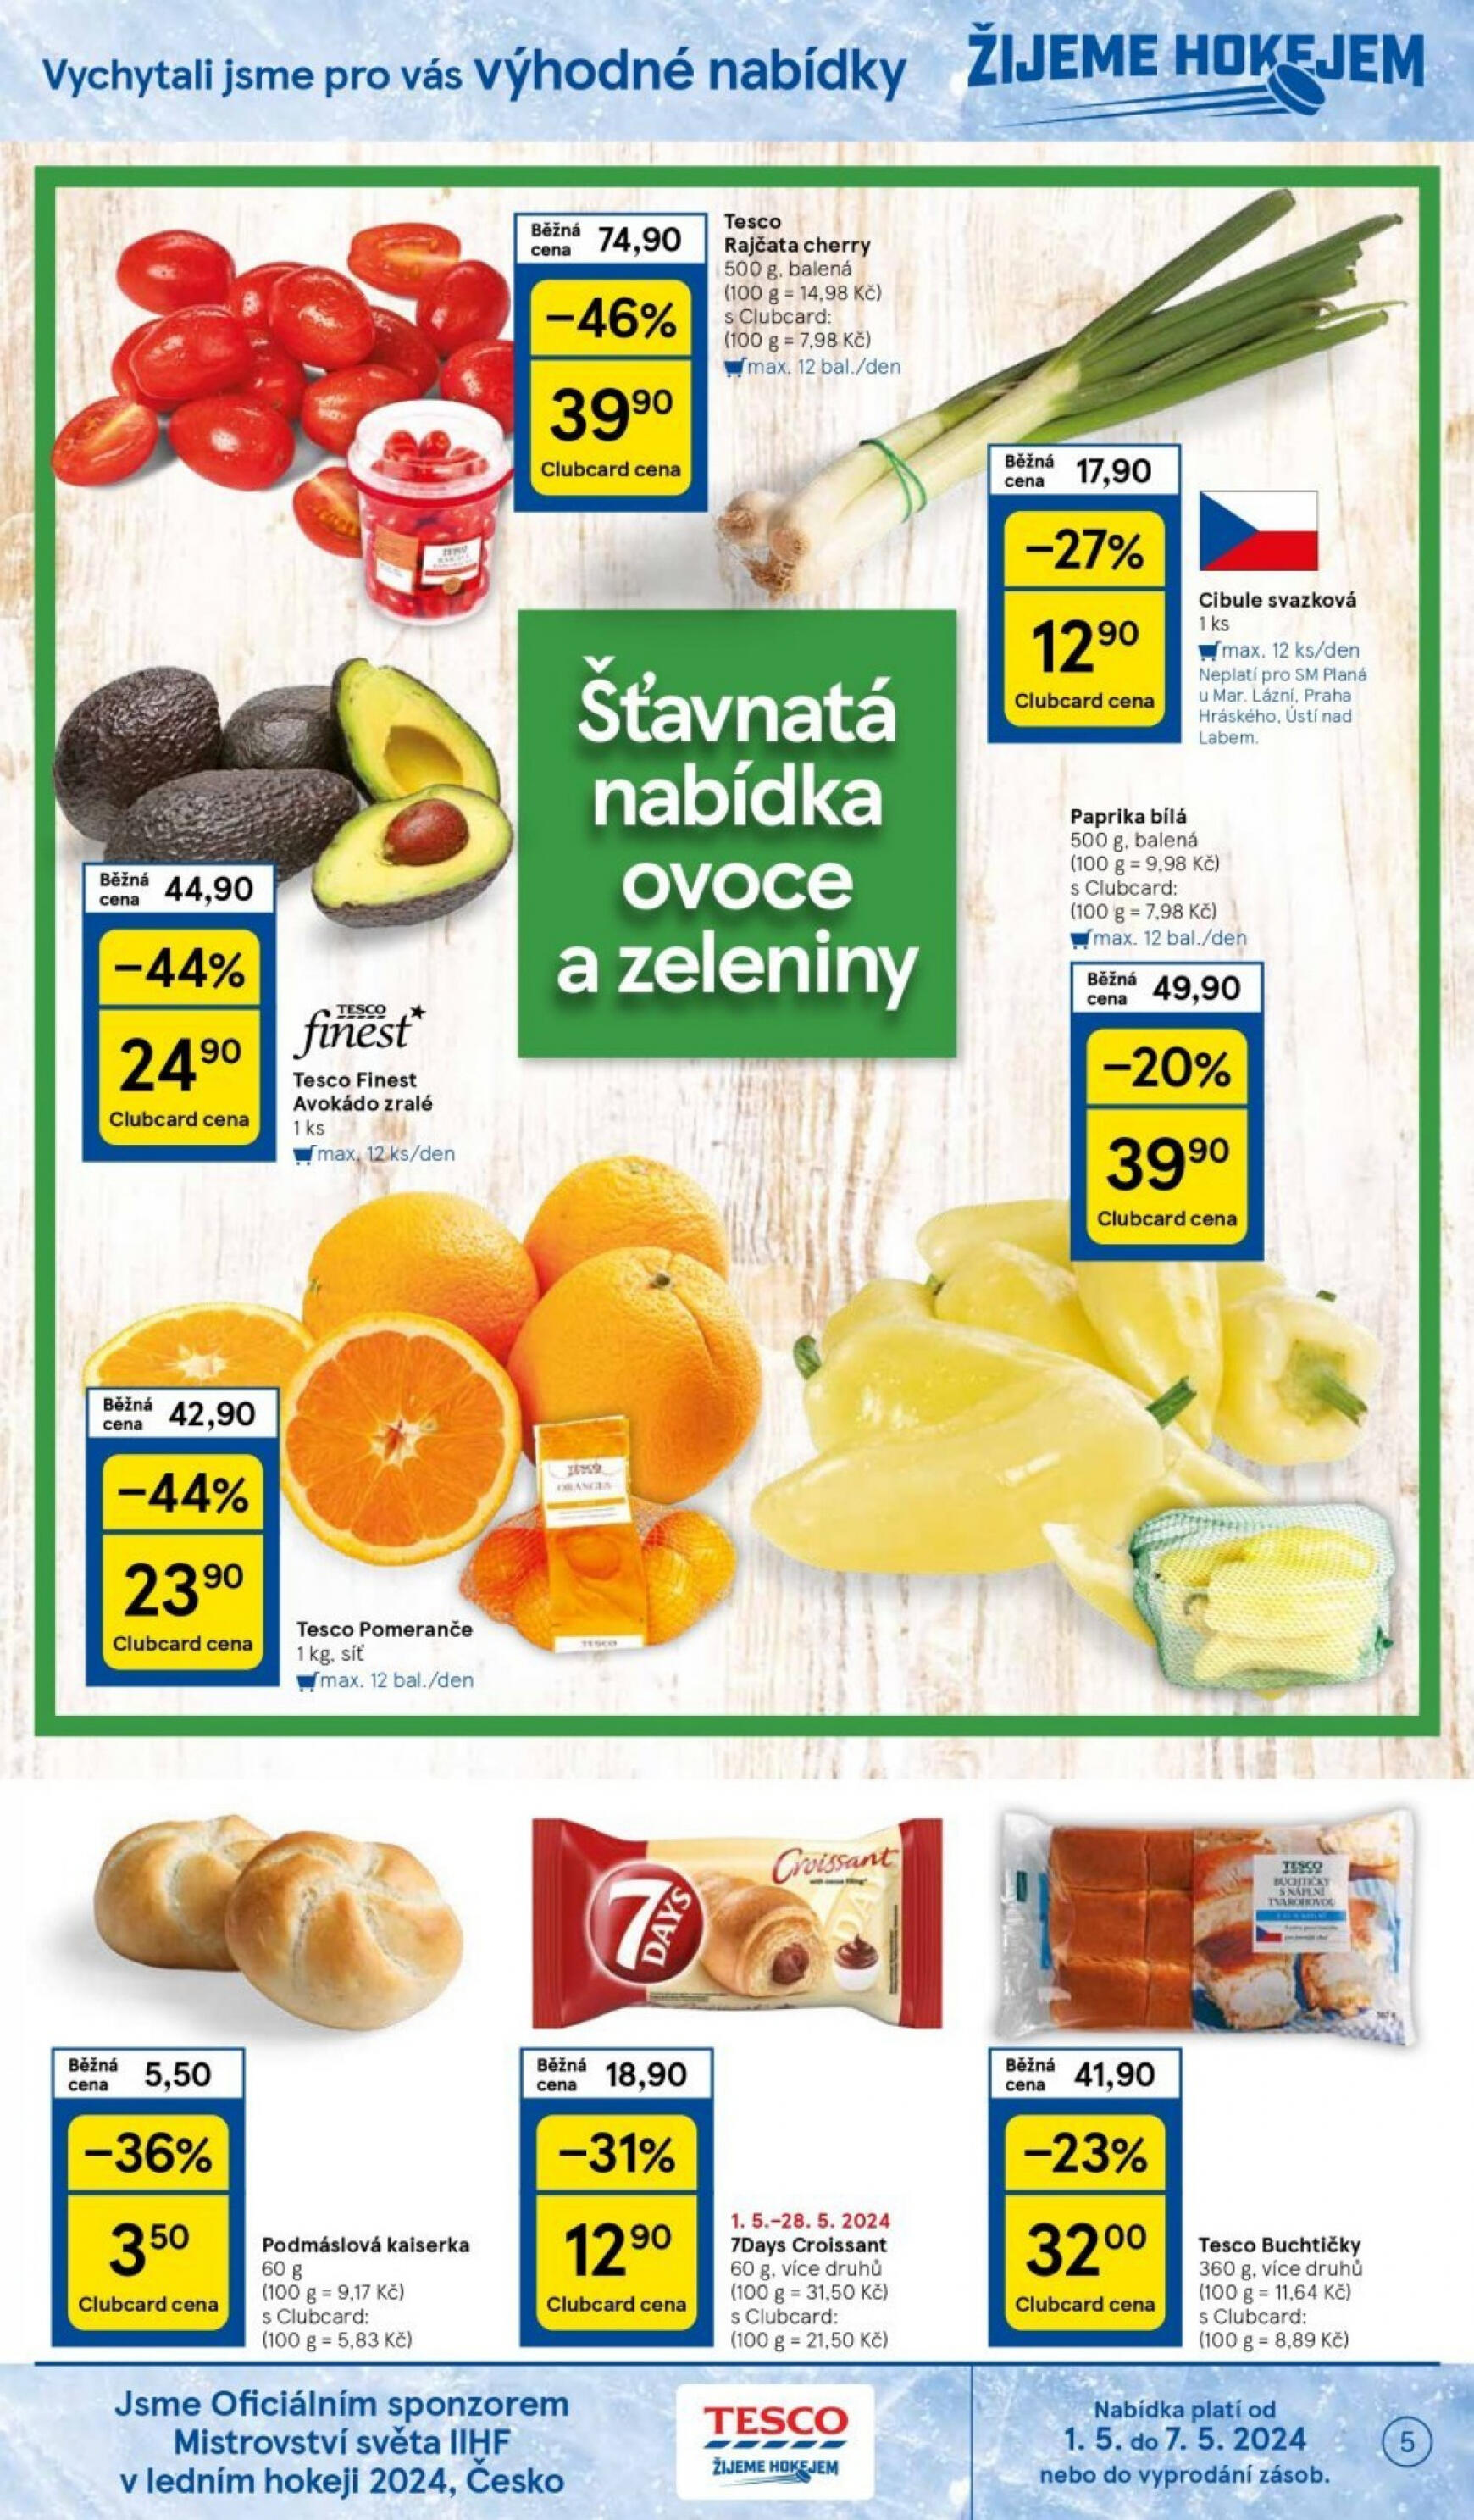 tesco - Leták Tesco supermarket aktuální 01.05. - 07.05. - page: 5